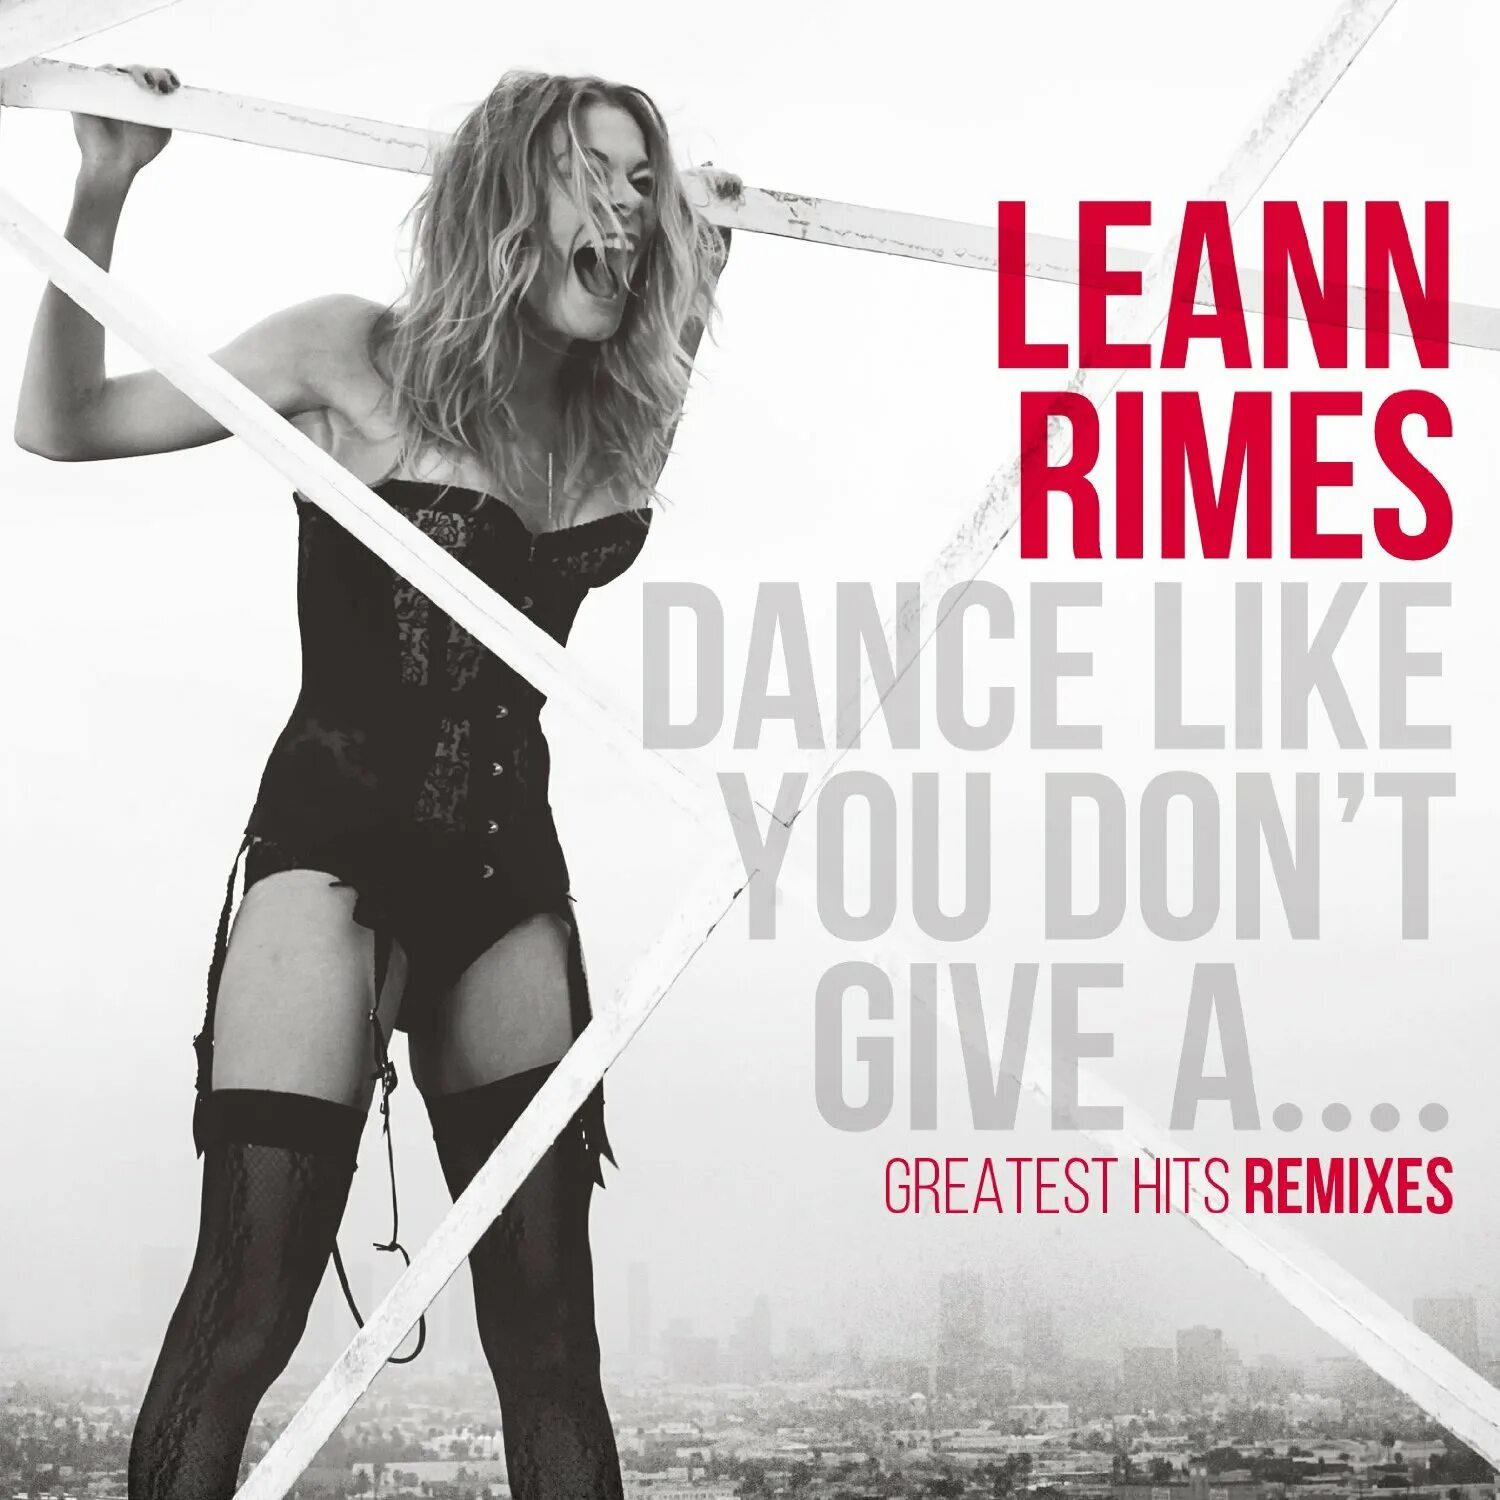 Loves like dancing. Леан Римес. Gasoline and Matches Лиэнн Раймс. Leann Rimes обложки с альбомов. Leann Rimes the best ОА обложка.